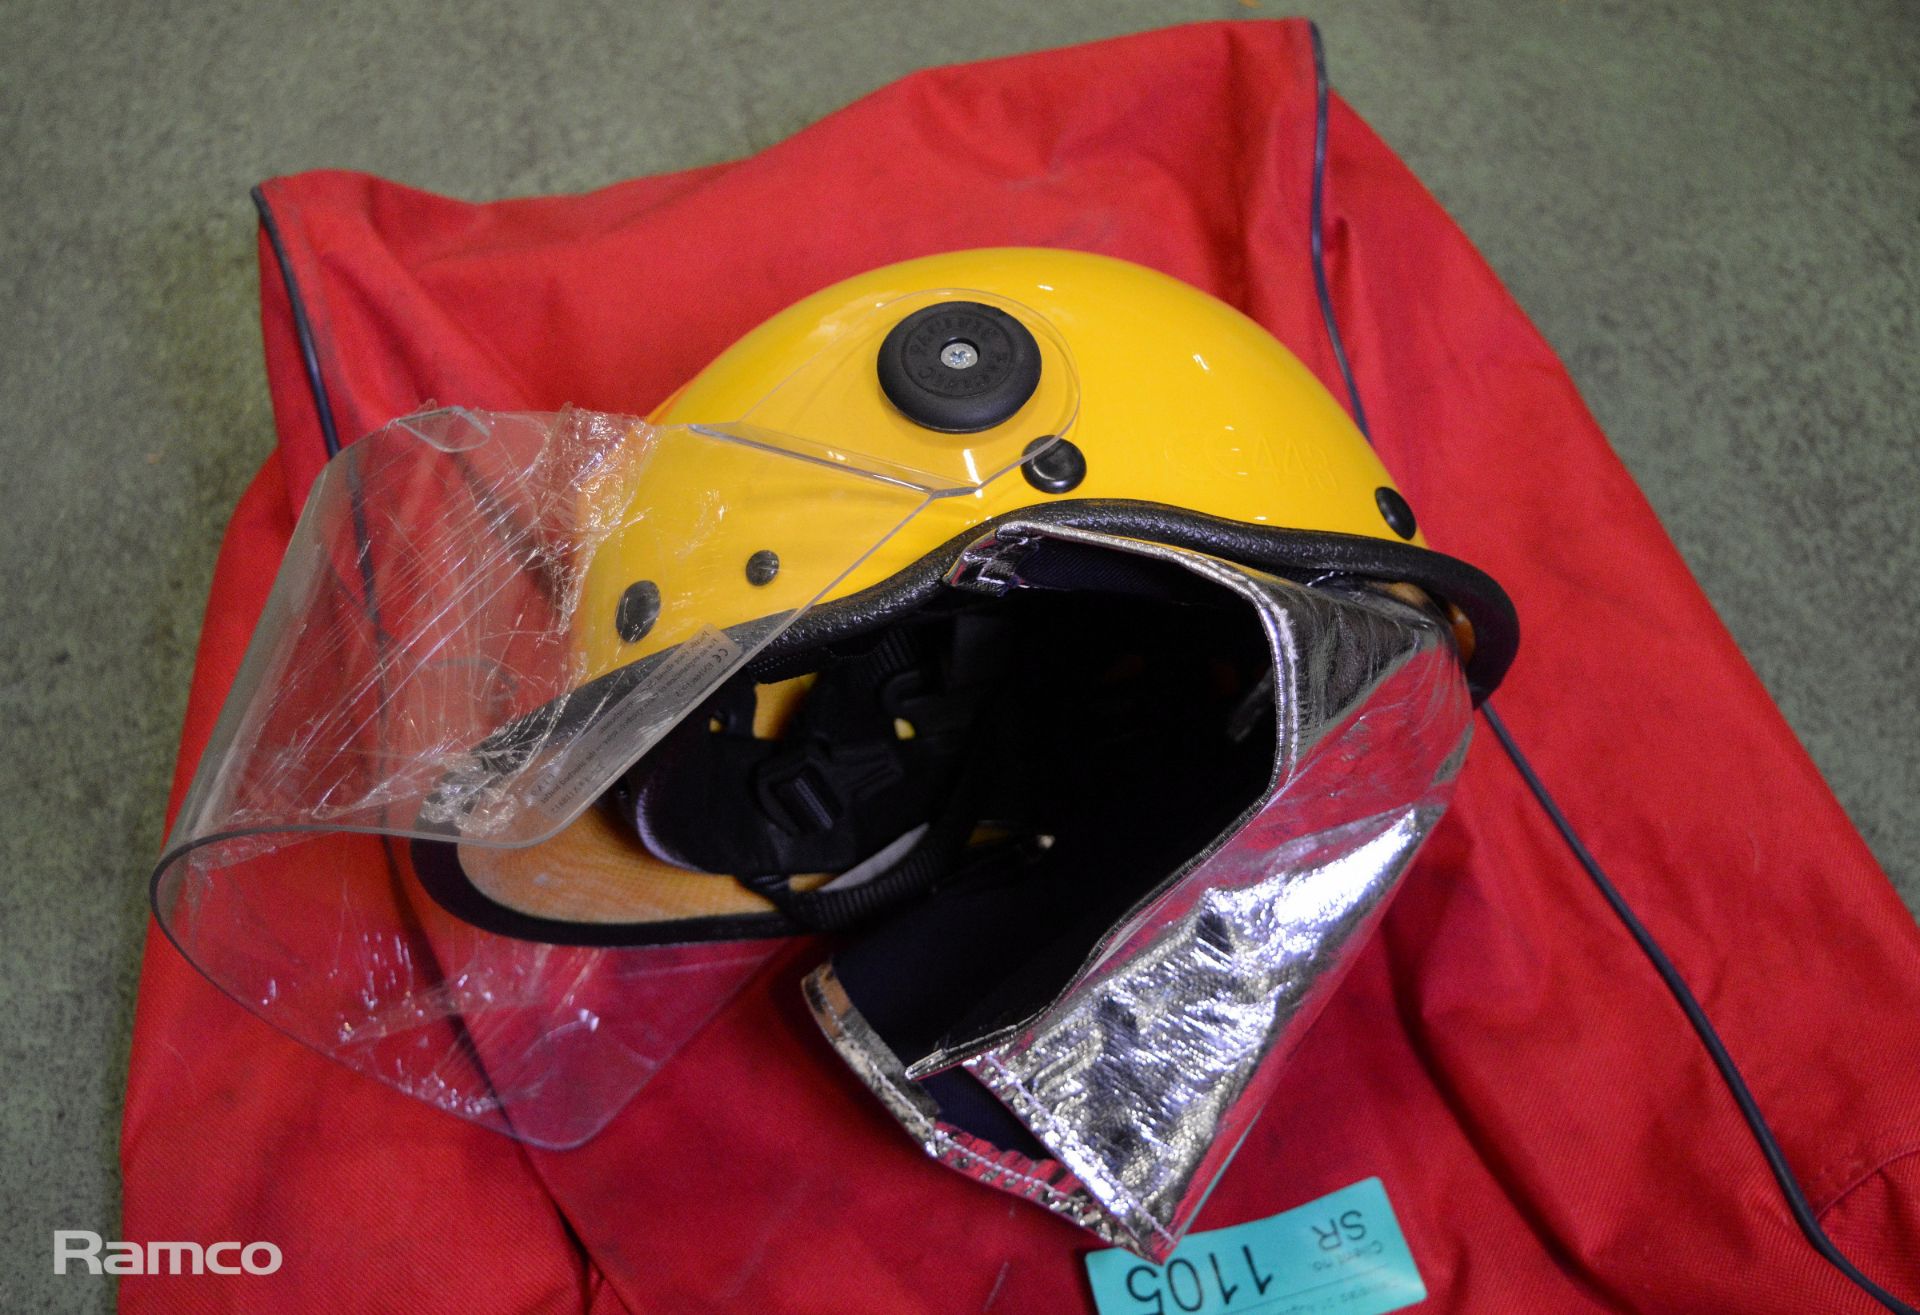 Firefighter equipment - Helmet & Wellington boots (size 10) - Image 4 of 8